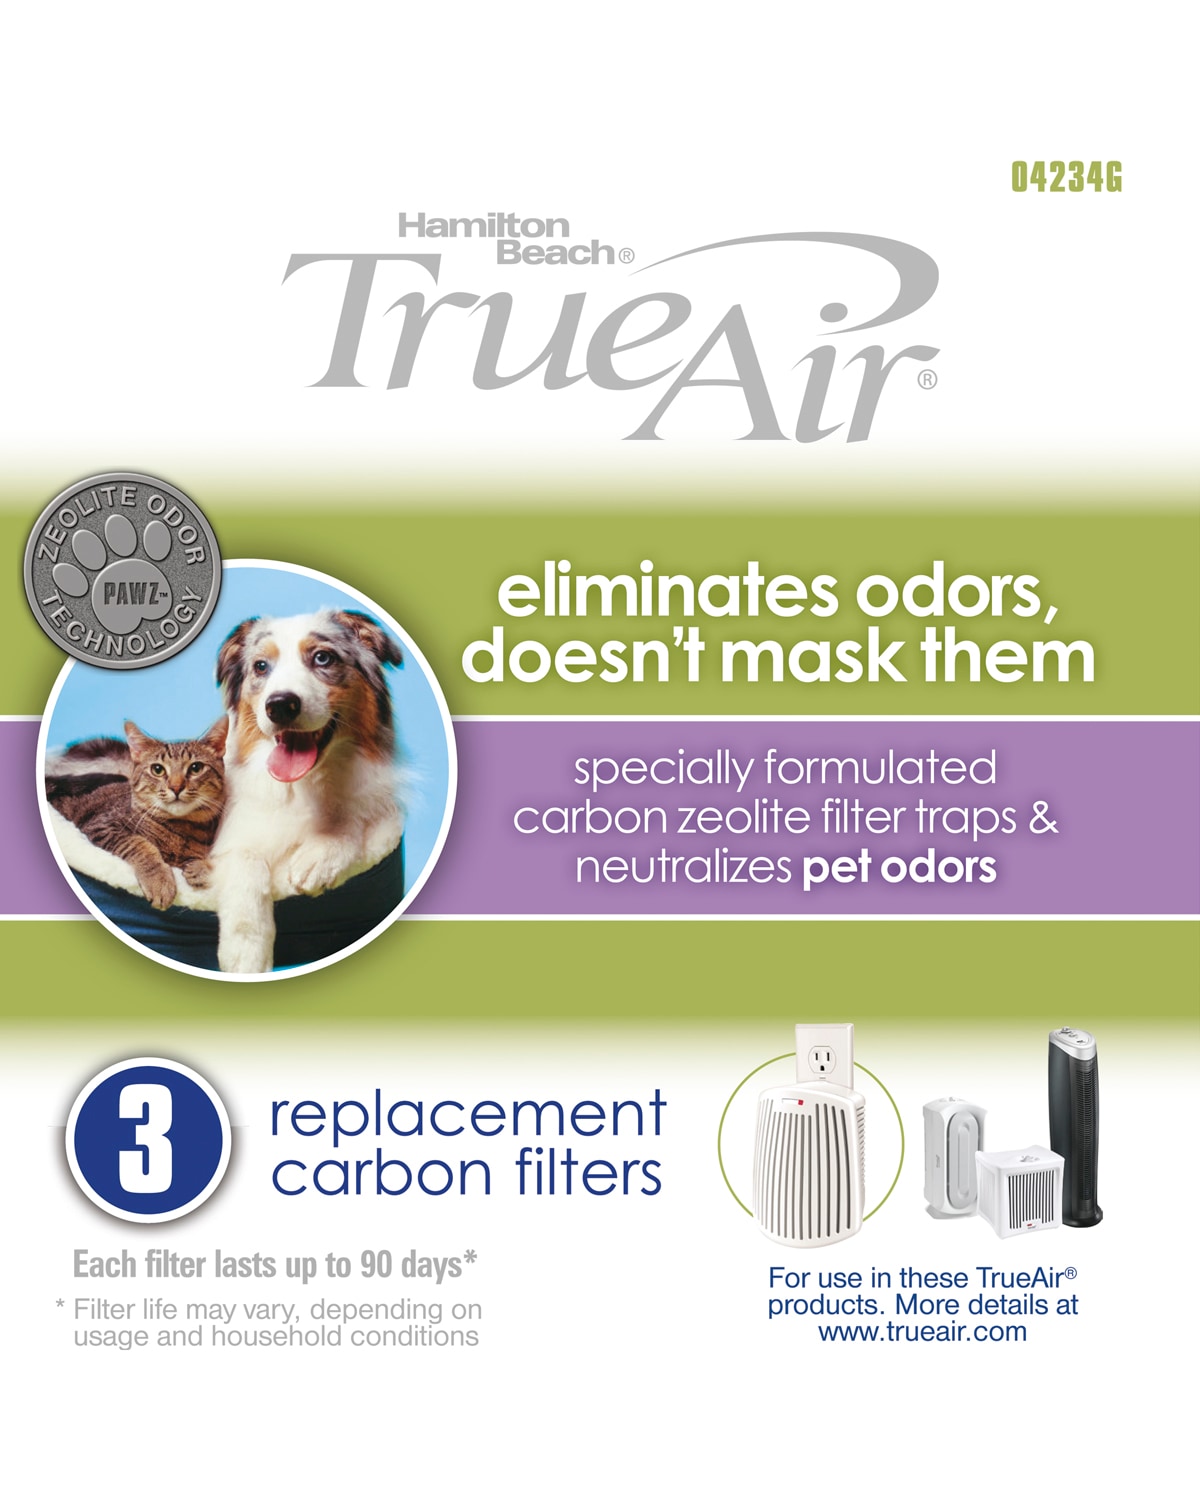 Air Purifier Filter for Pet Odor – Filter T